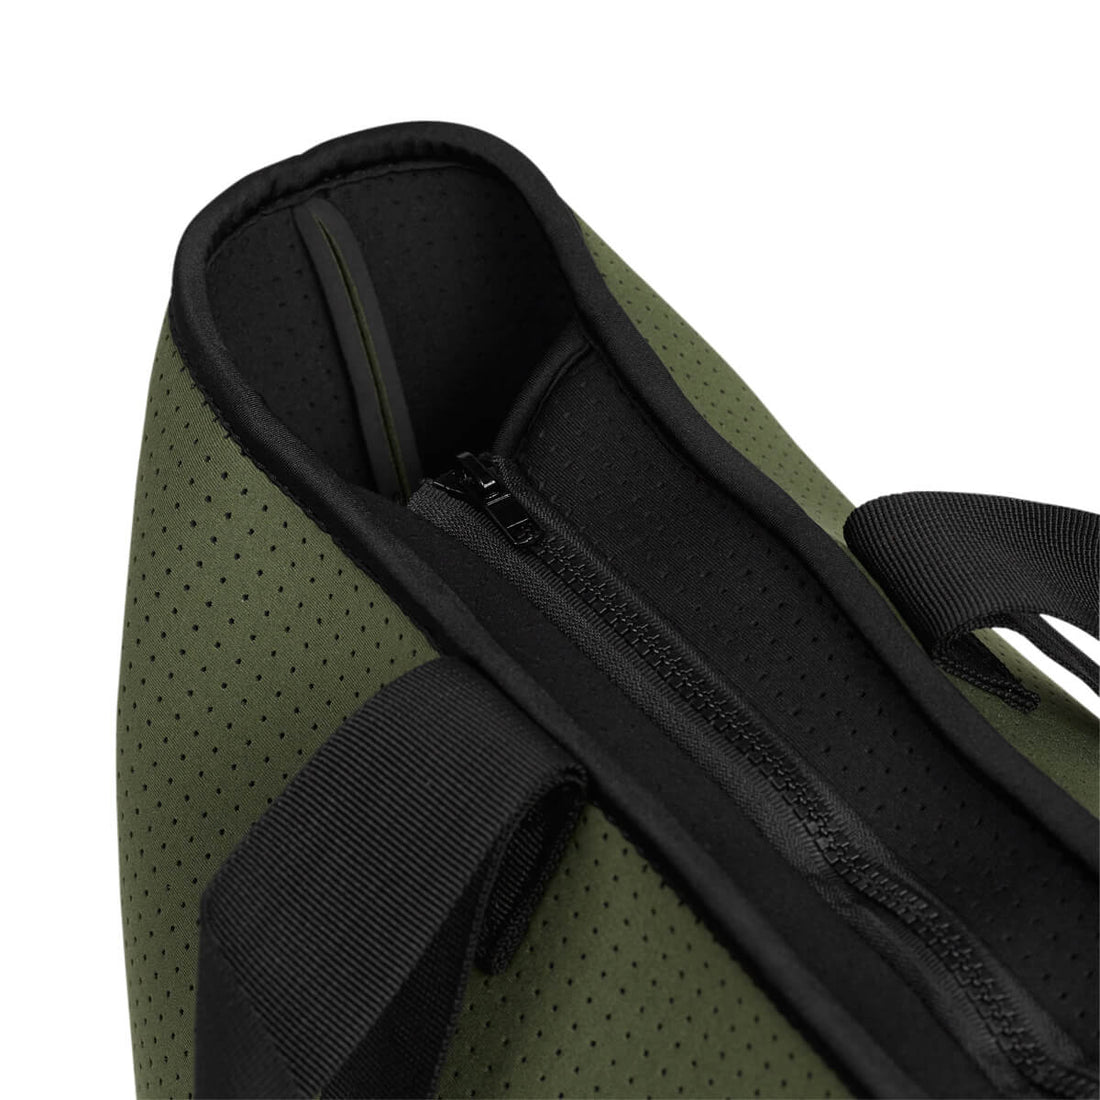 Neoprene bag in khaki with double straps zipper details